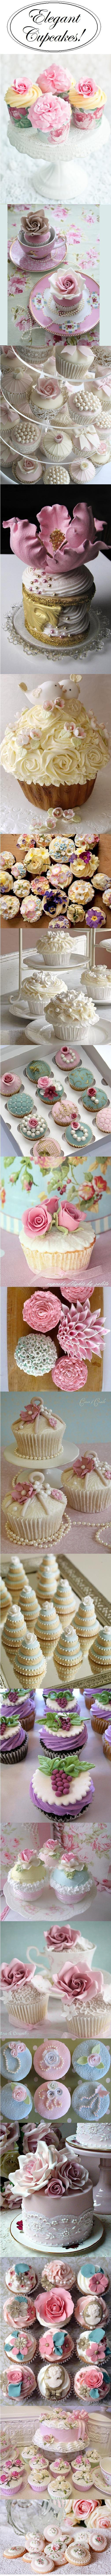 Mariage - Cupcakes!!  Everything Cupcake!  ....Share Your  Favorite Cupcake Bakery, Cupcake Blog, Cupcake Images... Everything Cupcake!